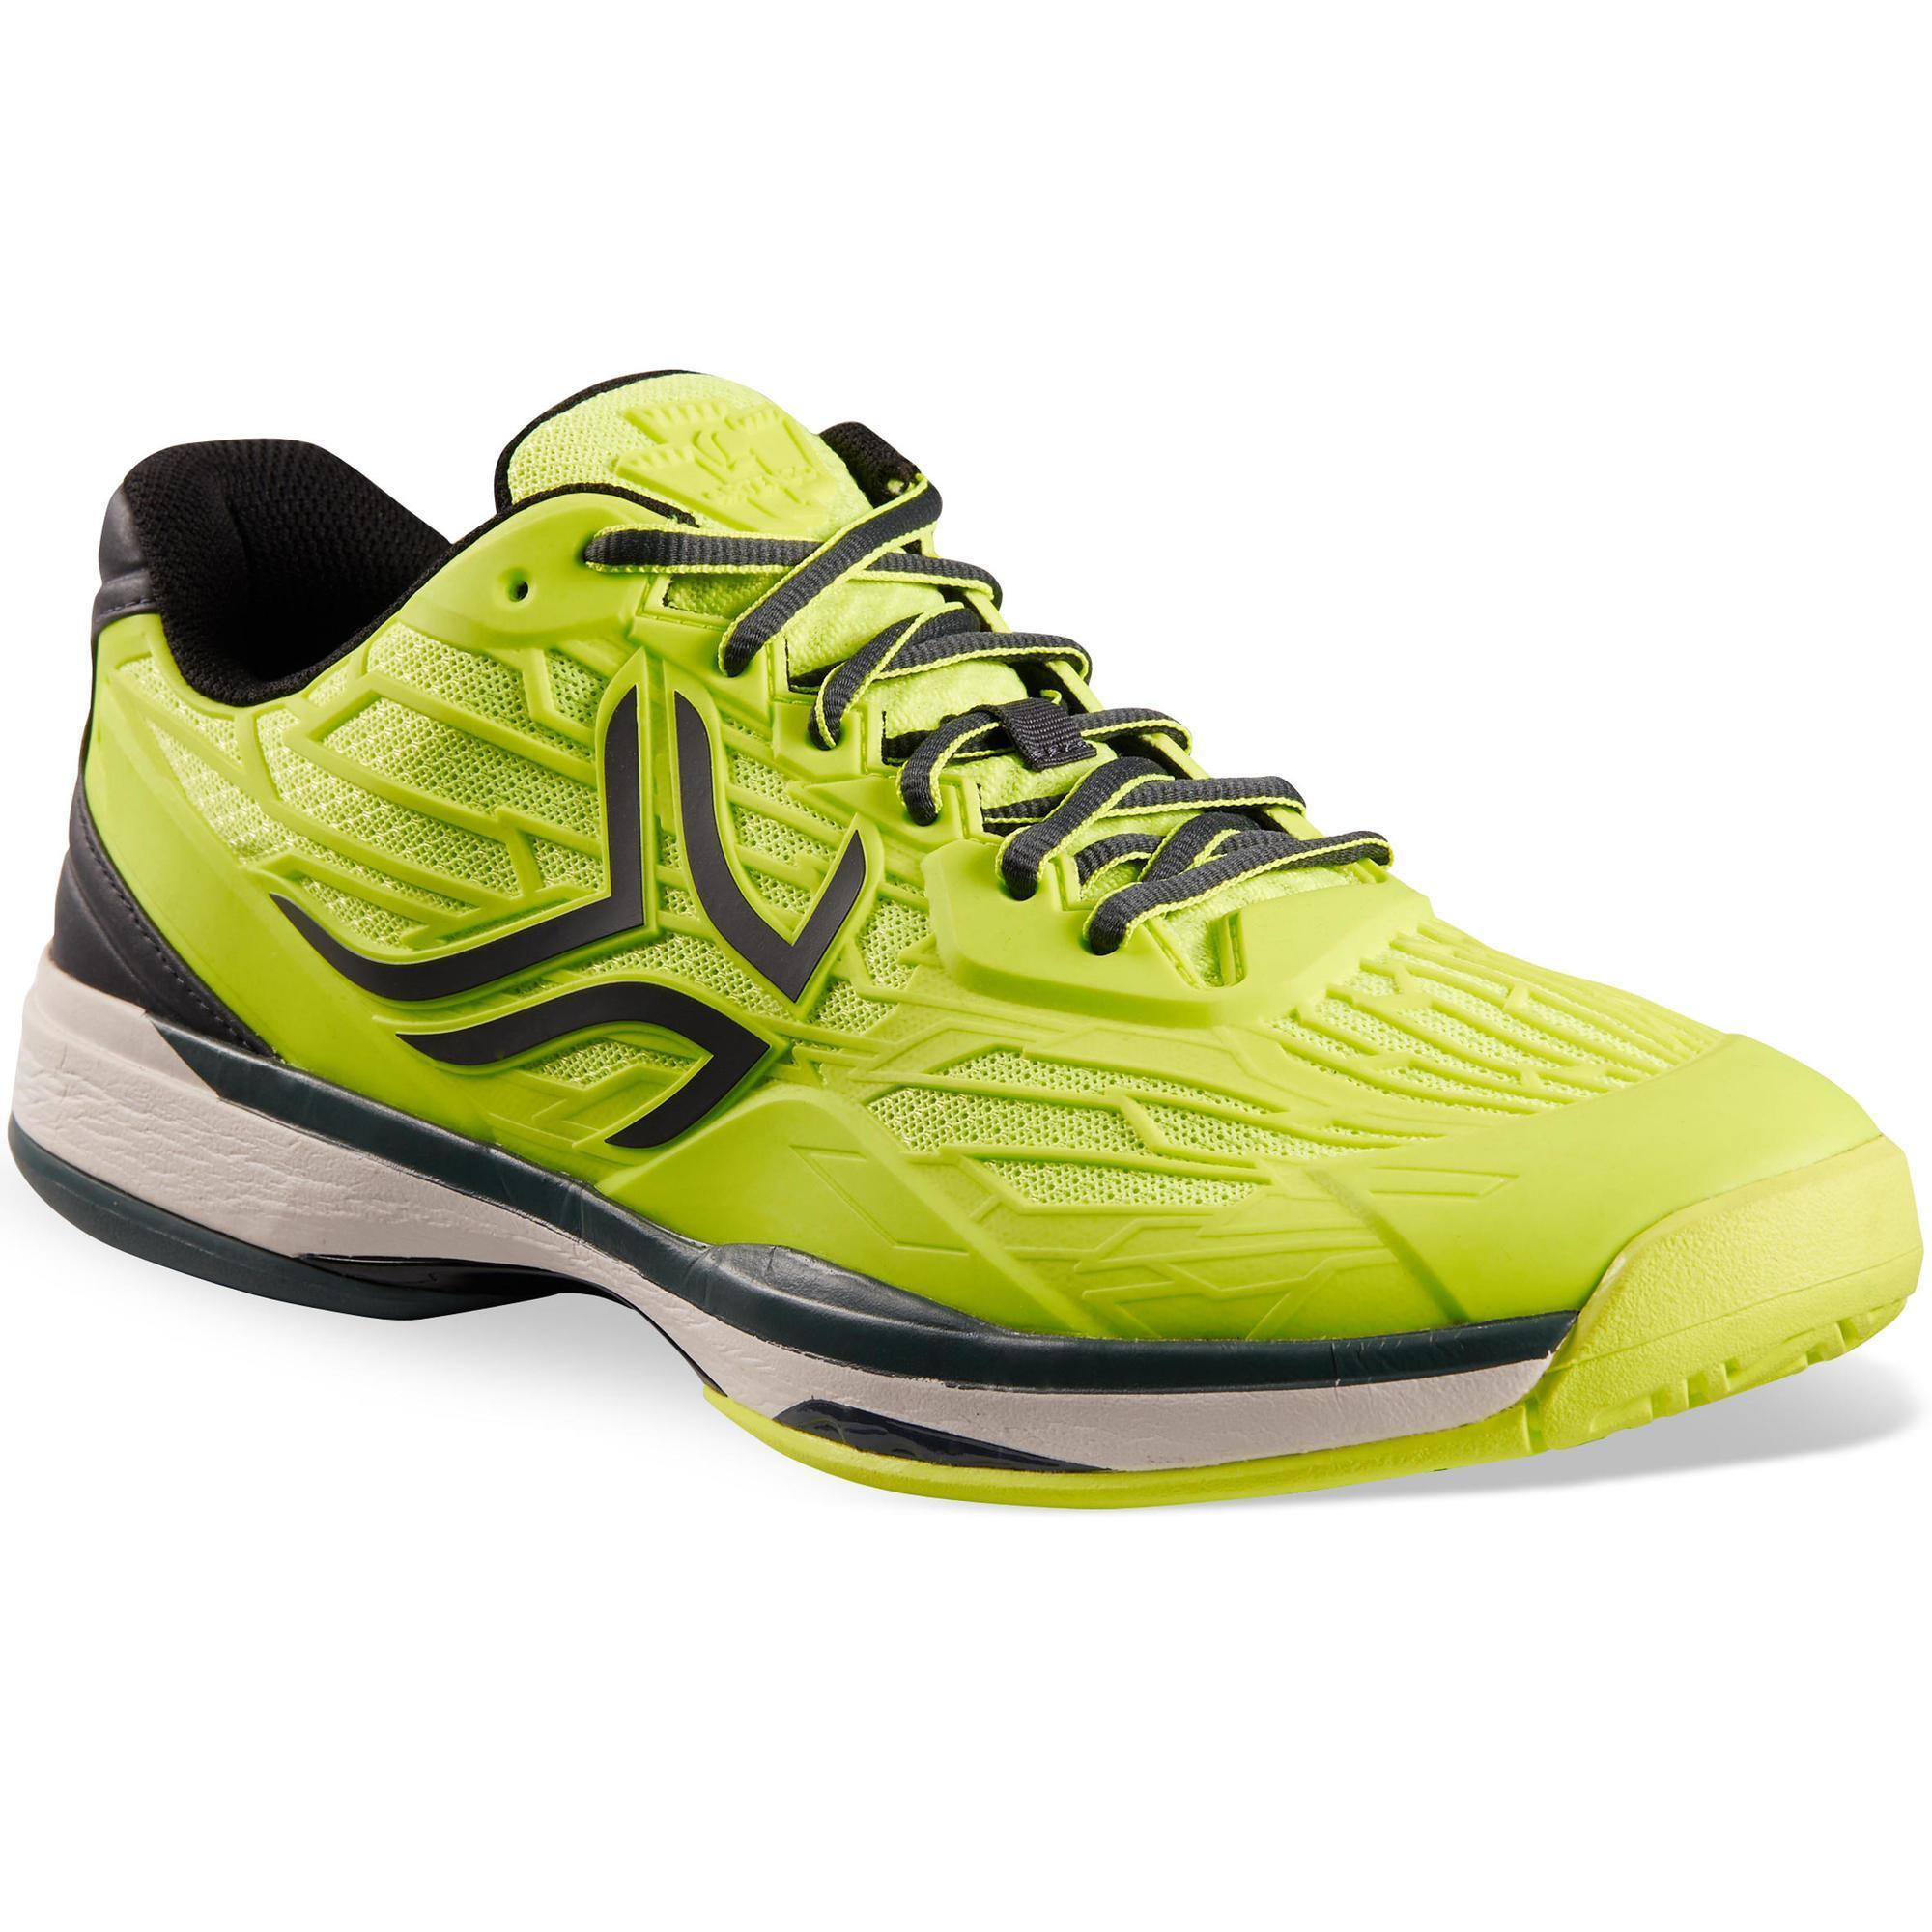 TS990 Multicourt Tennis Shoes Neon Yellow artengo